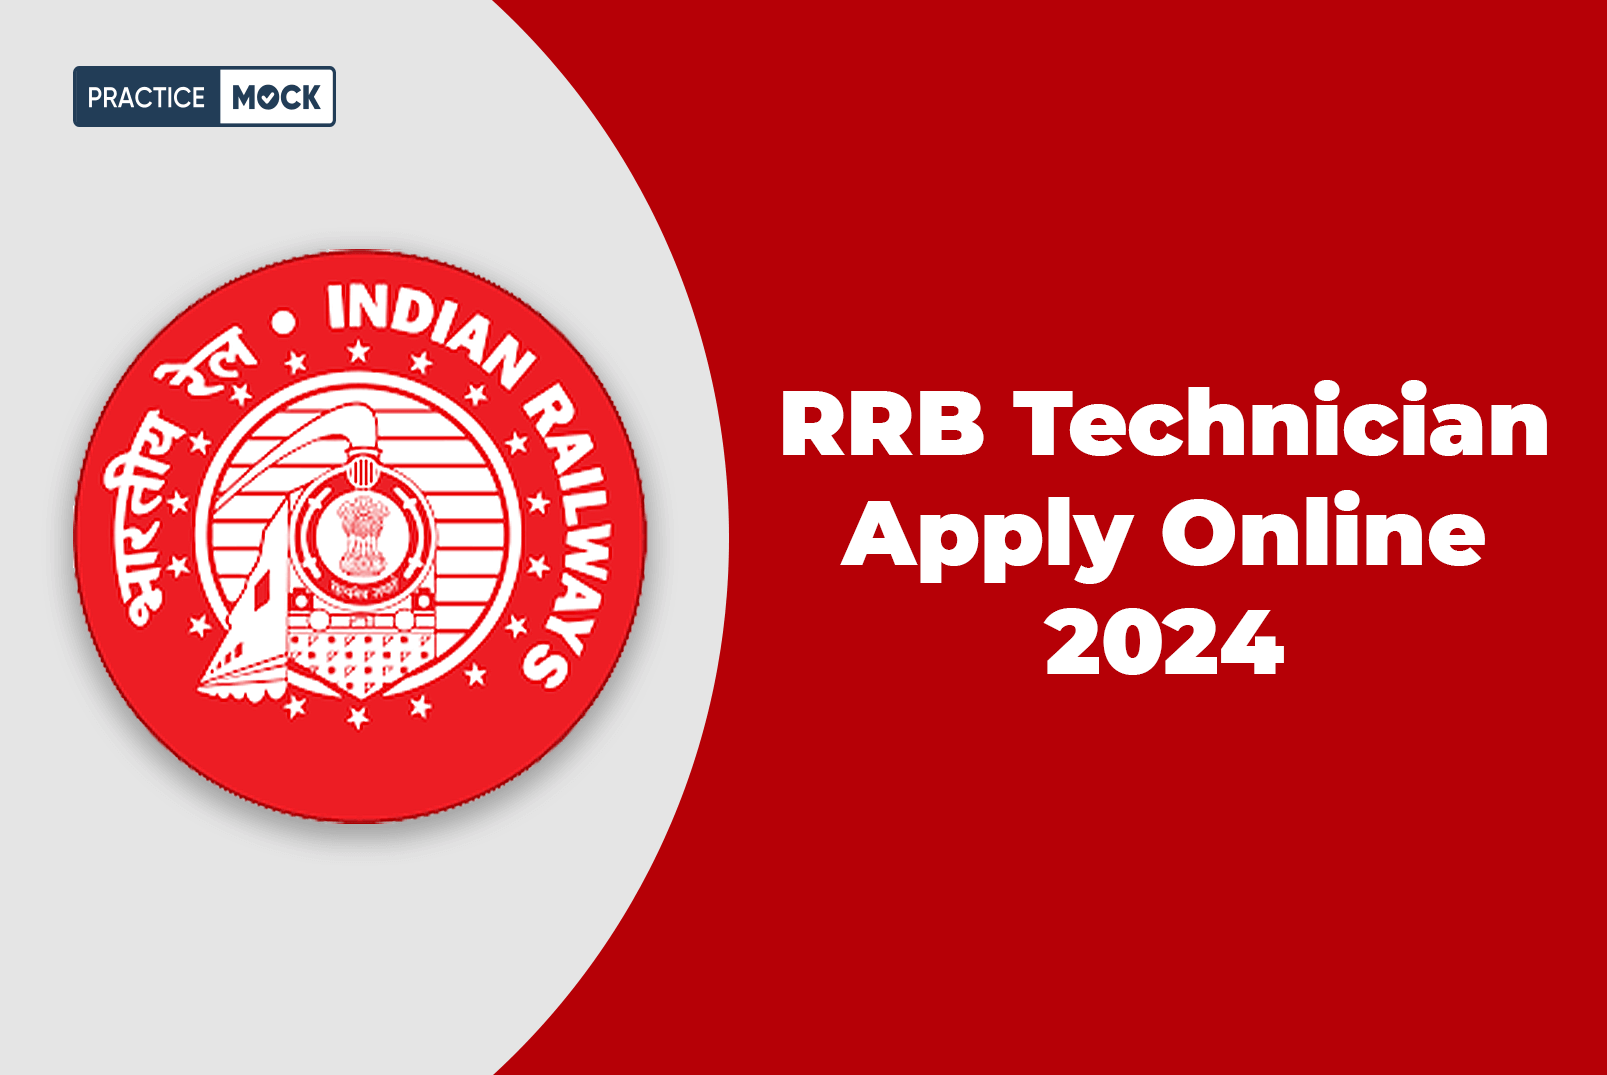 RRB Technician Apply Online 2024